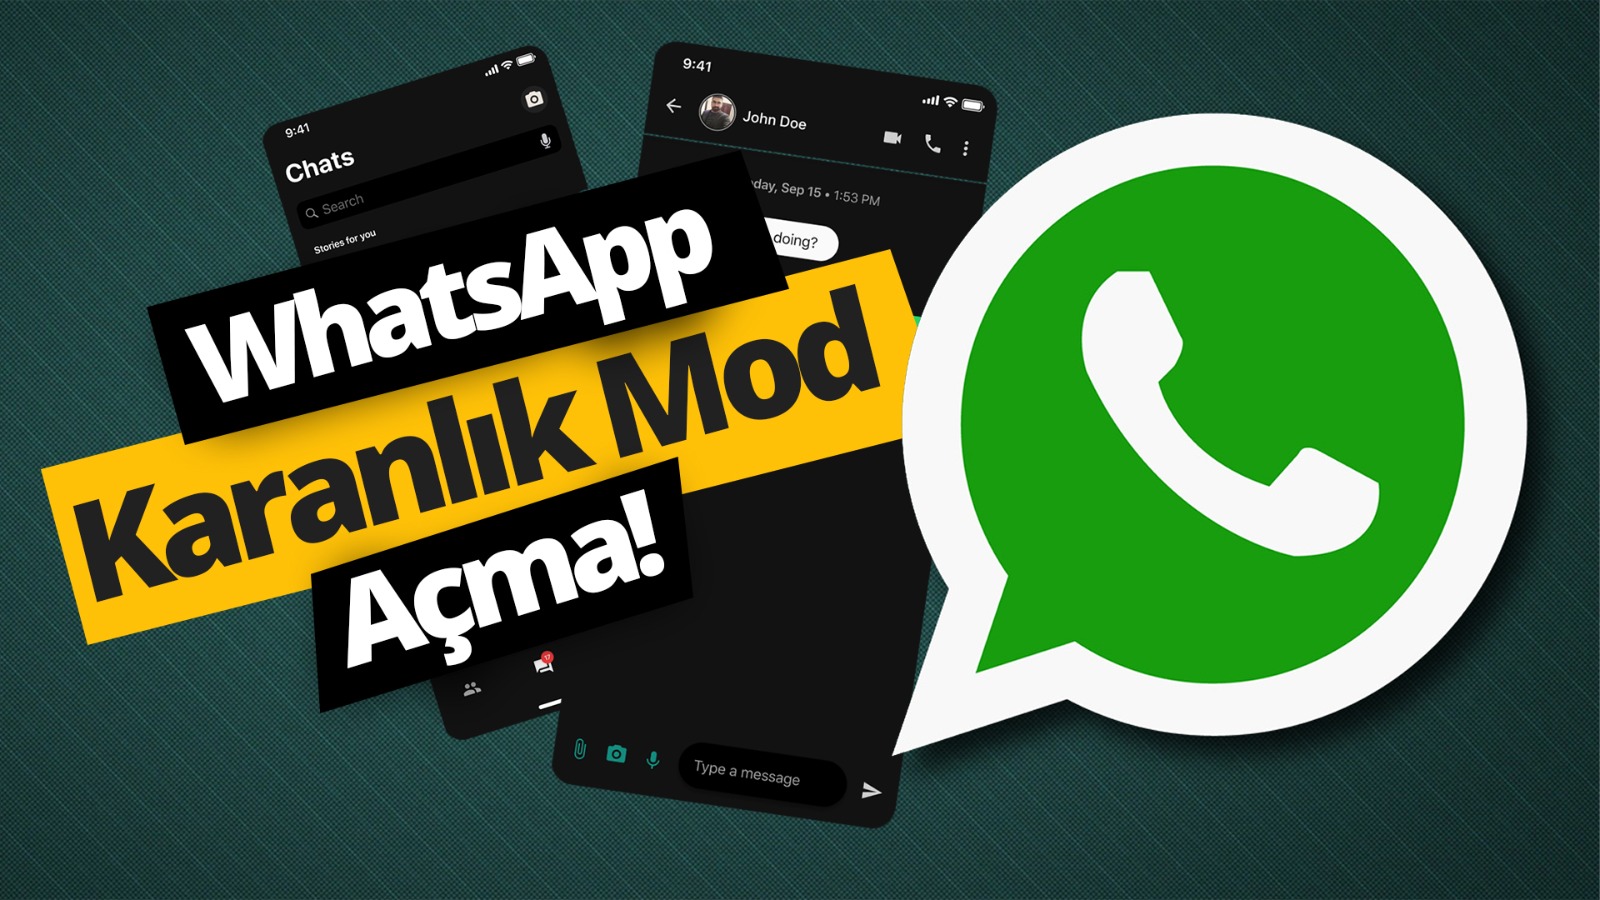 WhatsApp karanlık mod açma! (Video)